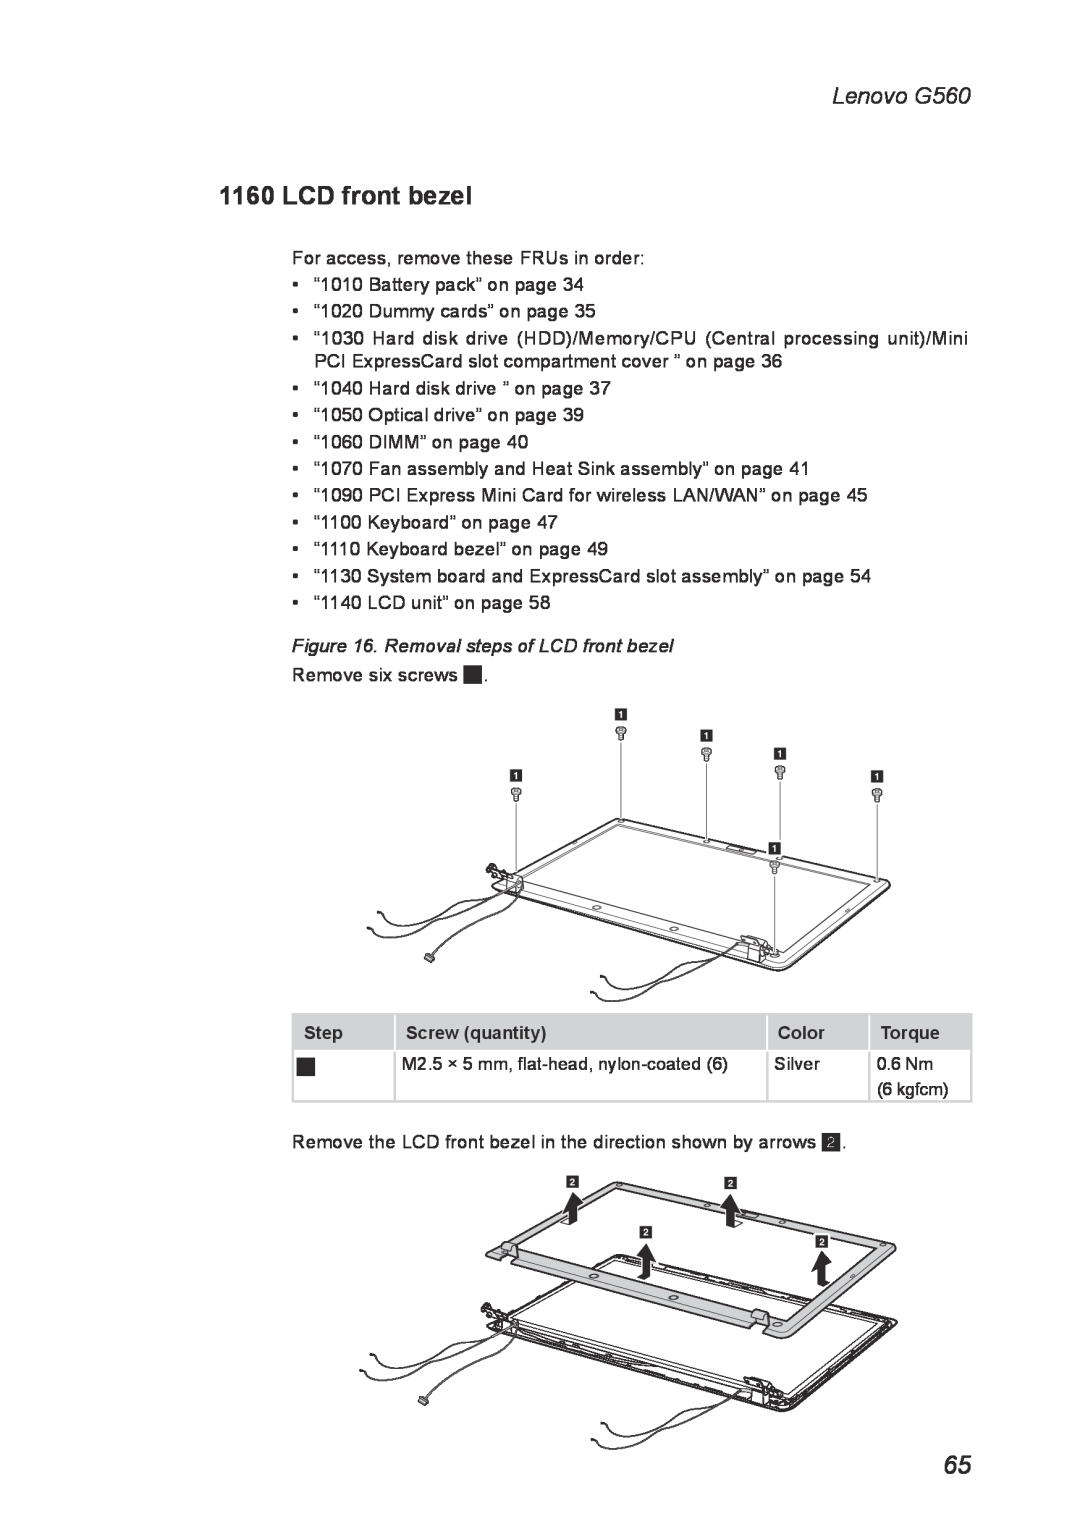 Lenovo manual Lenovo G560, Removal steps of LCD front bezel 